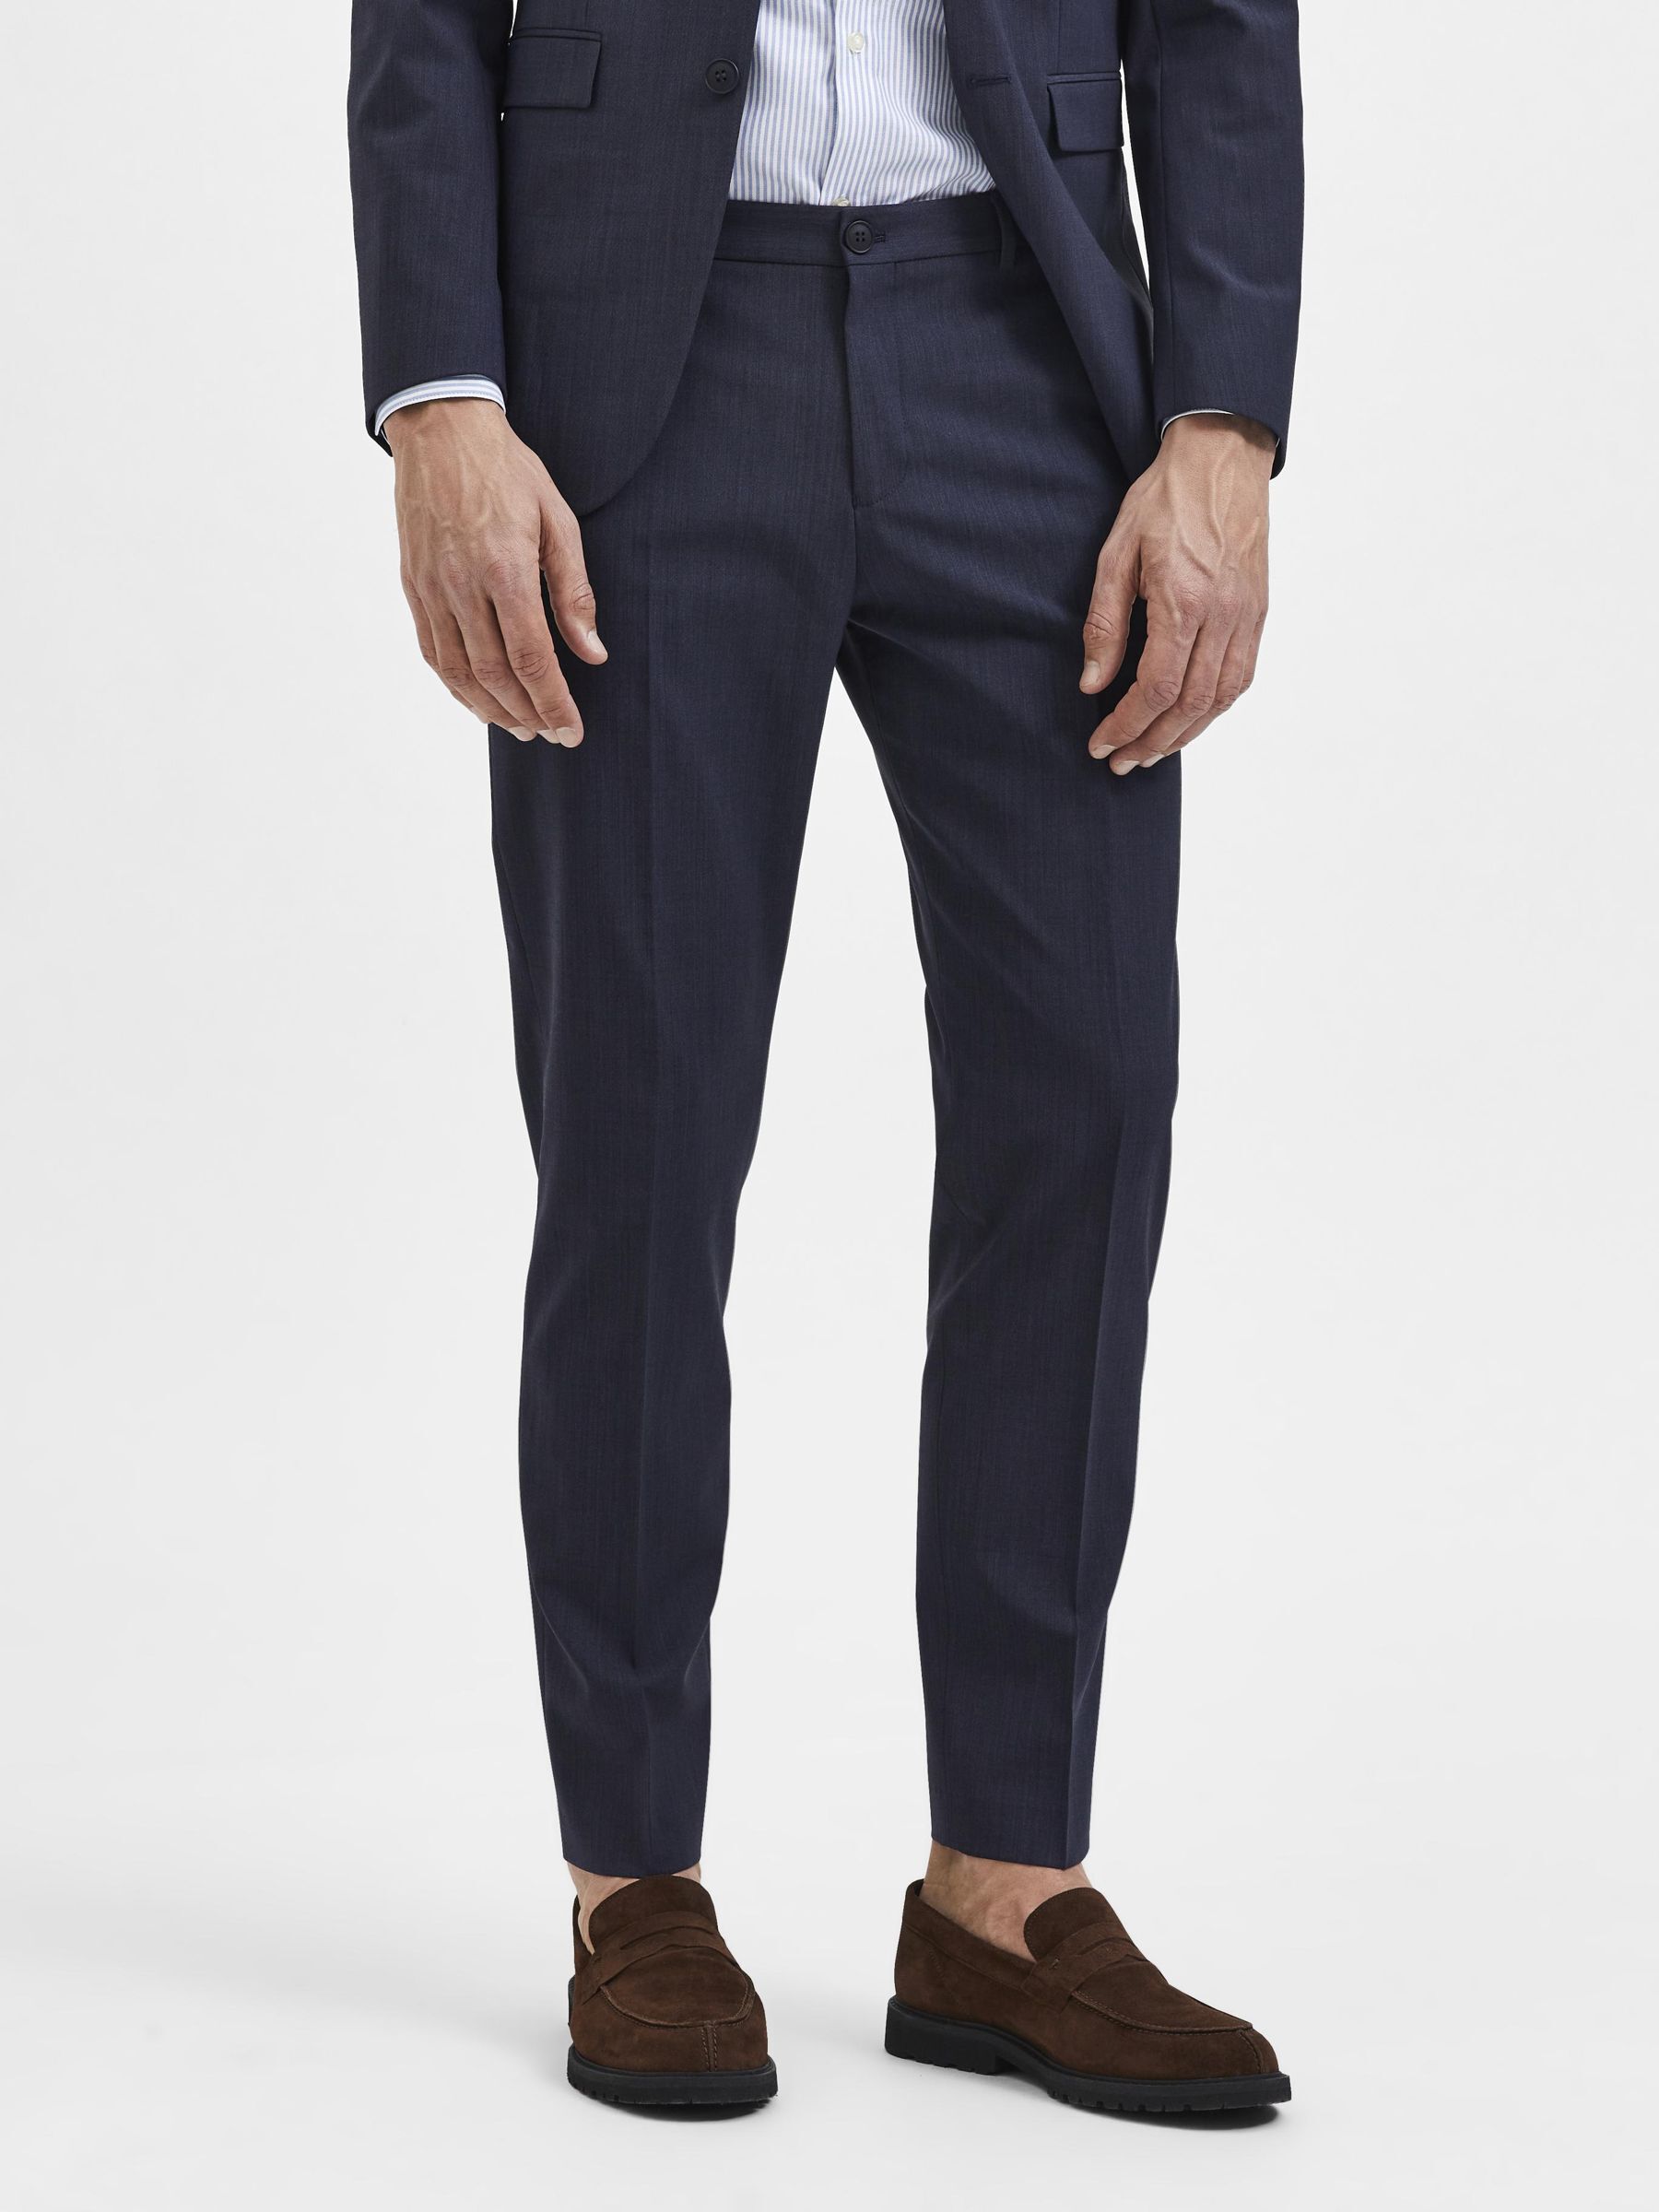 Buy Men Navy Solid Slim Fit Formal Trousers Online  610375  Peter England